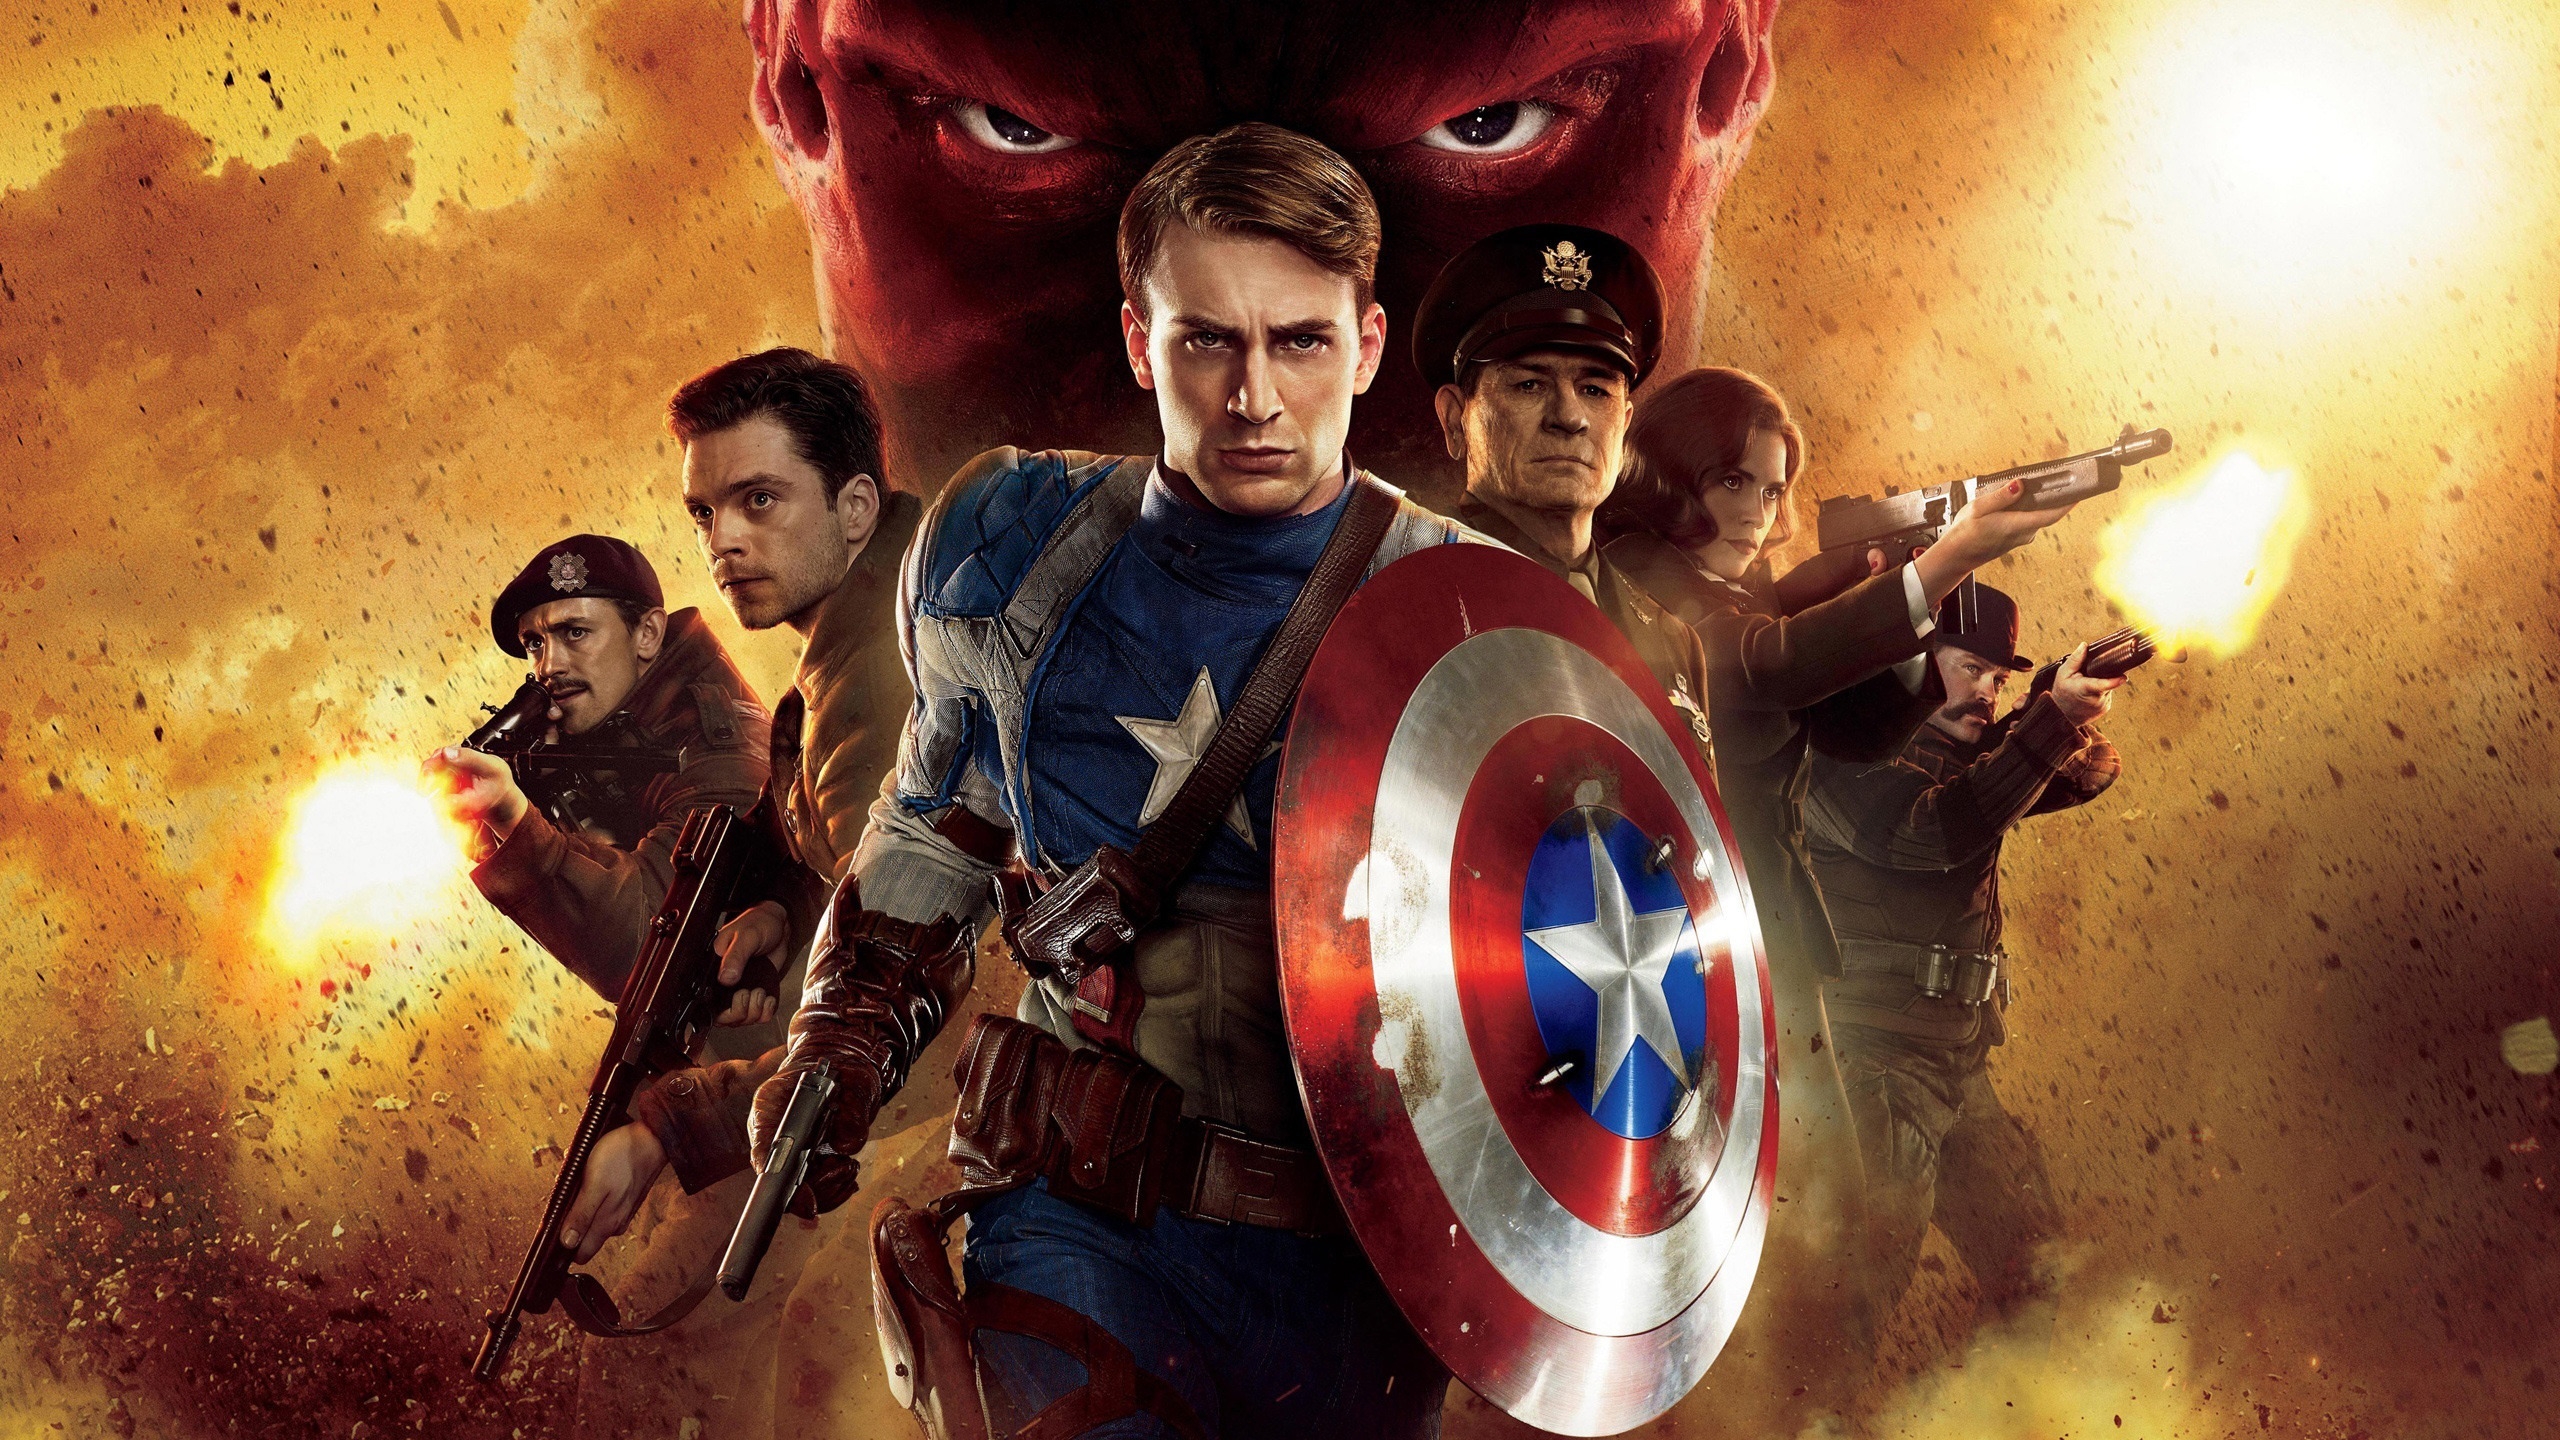 Captain America Movie for 2560x1440 HDTV resolution